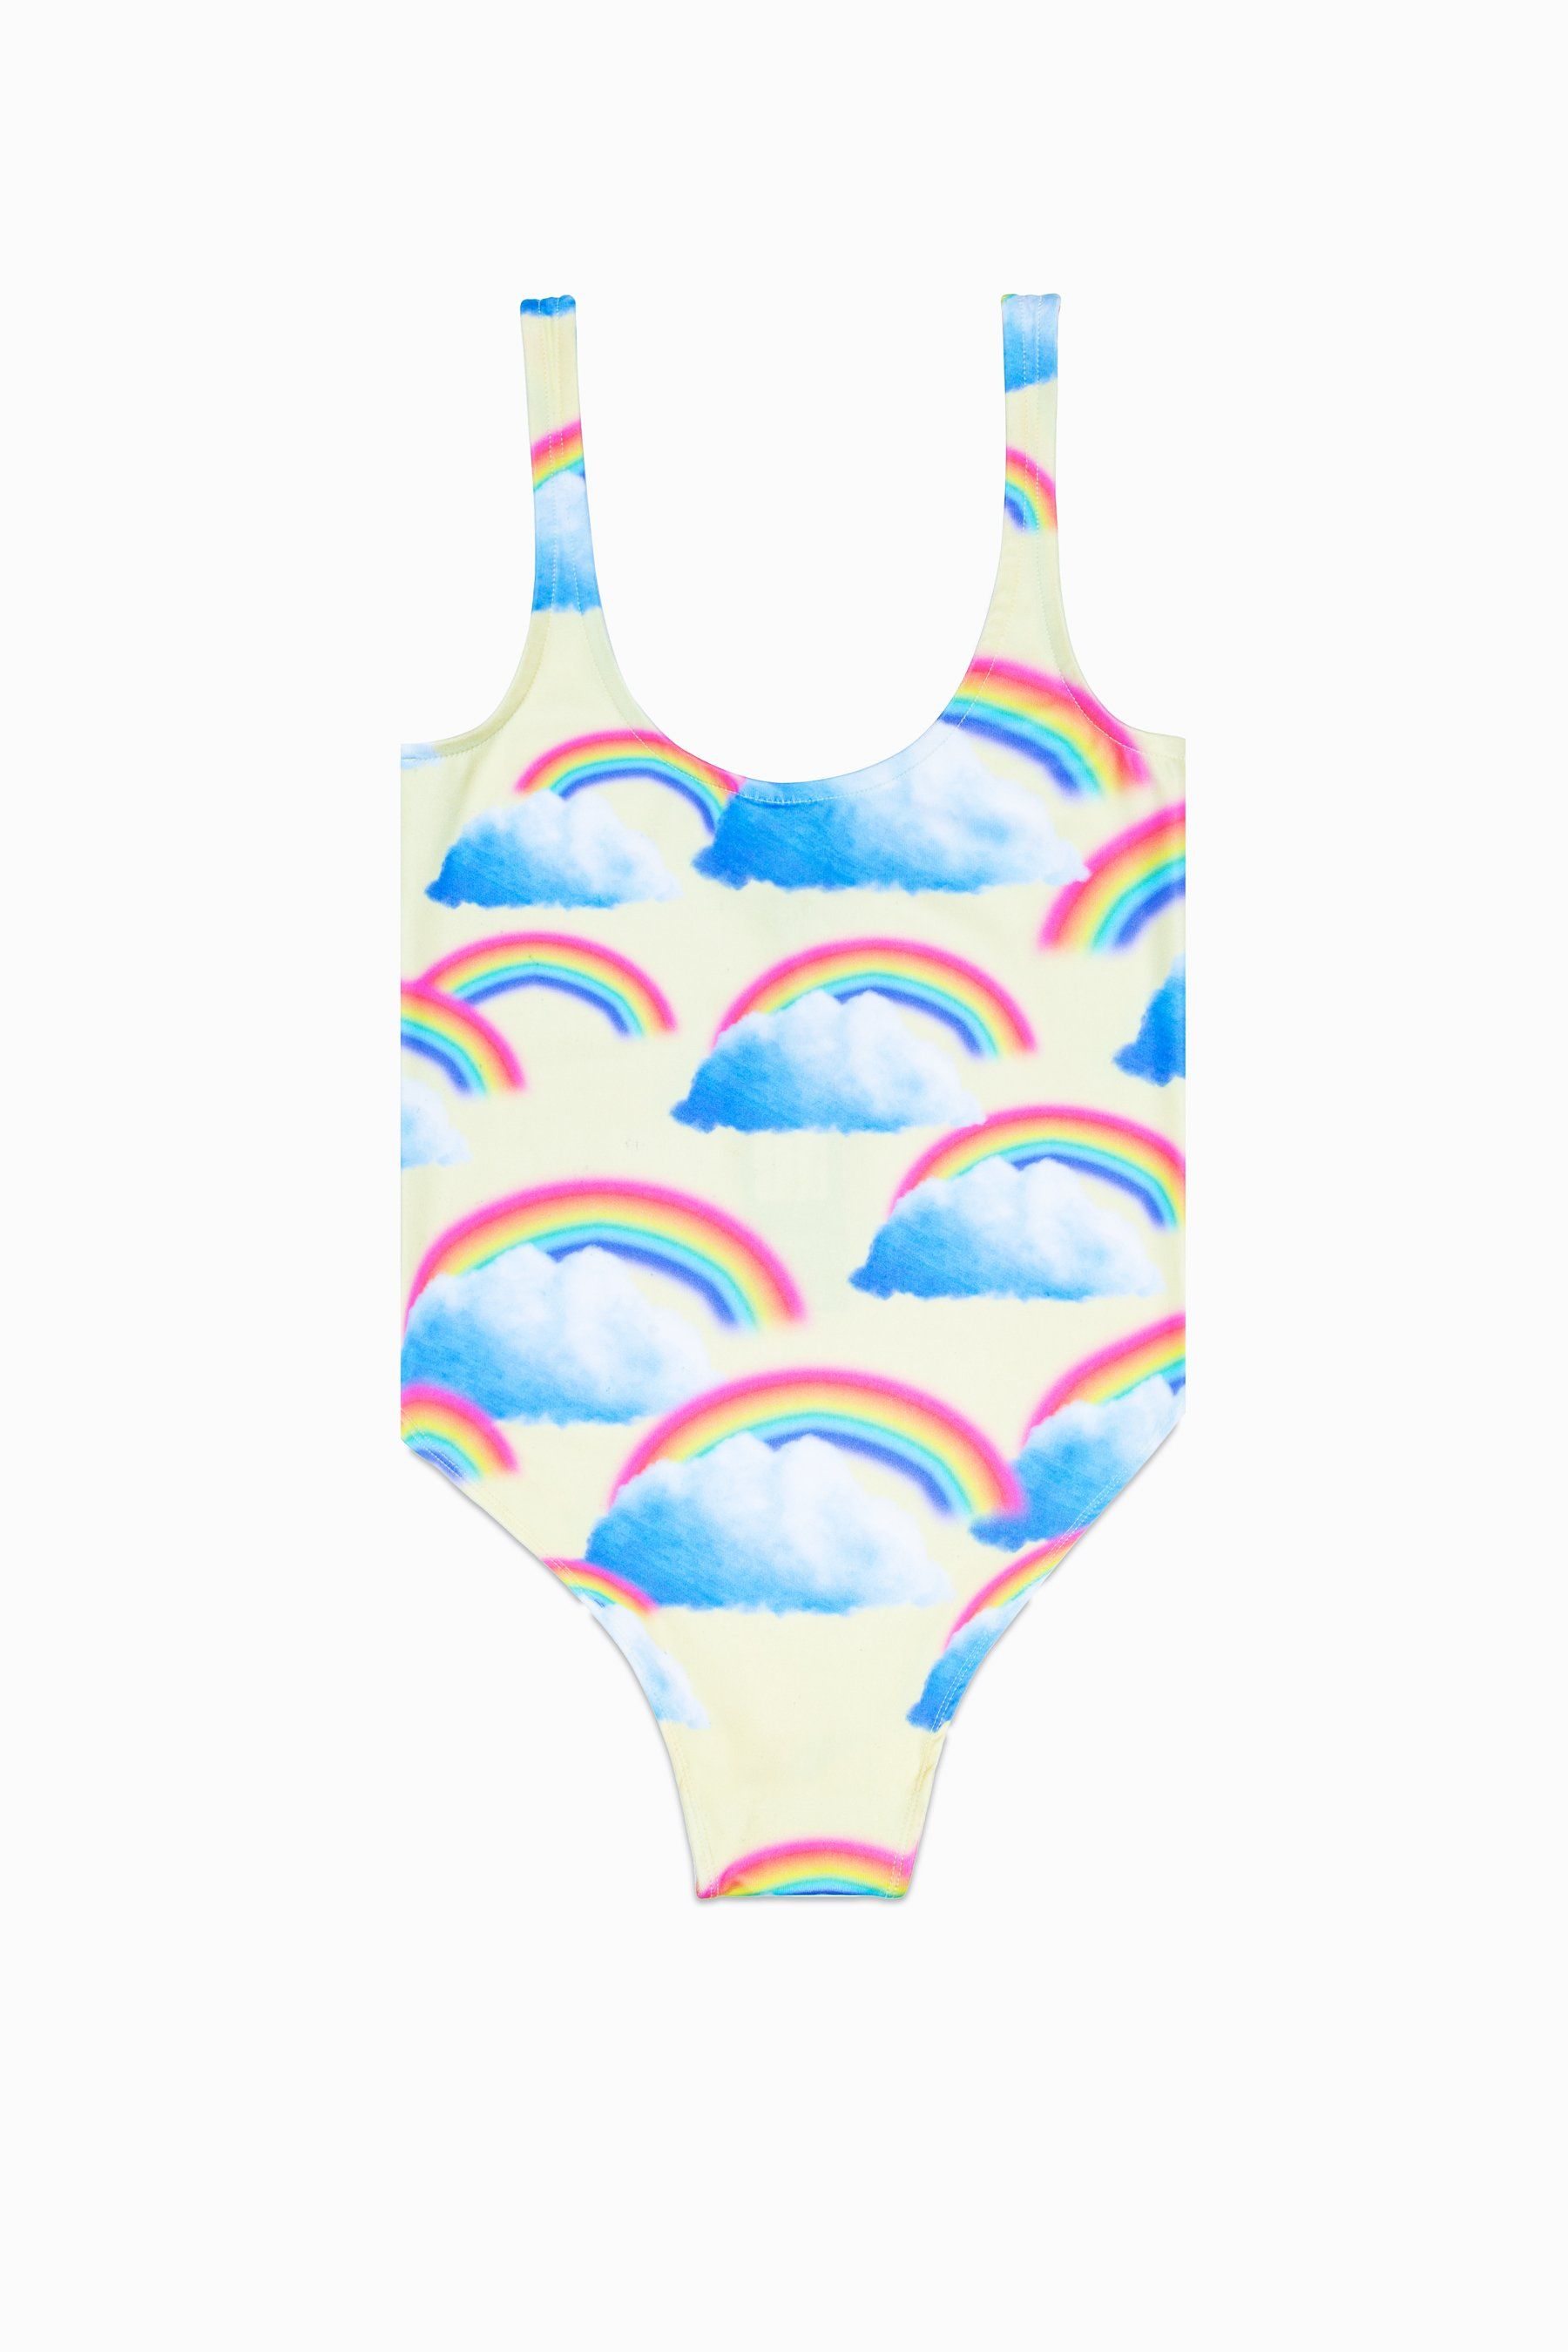 Hype Lemon Rainbow Kids Swimsuit